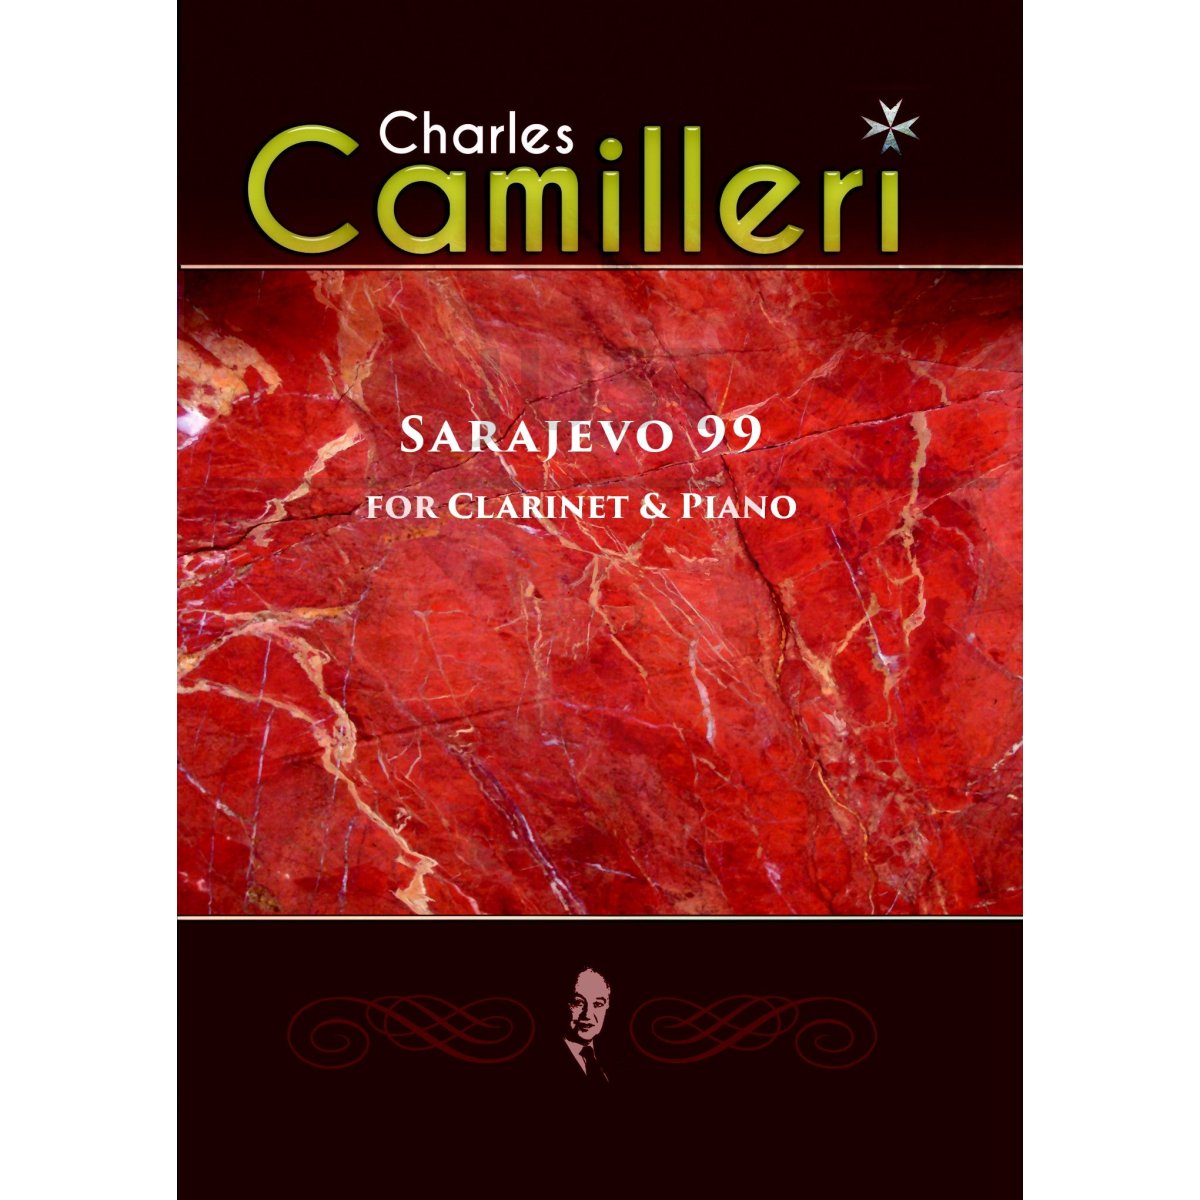 Sarajevo 99 for Clarinet and Piano